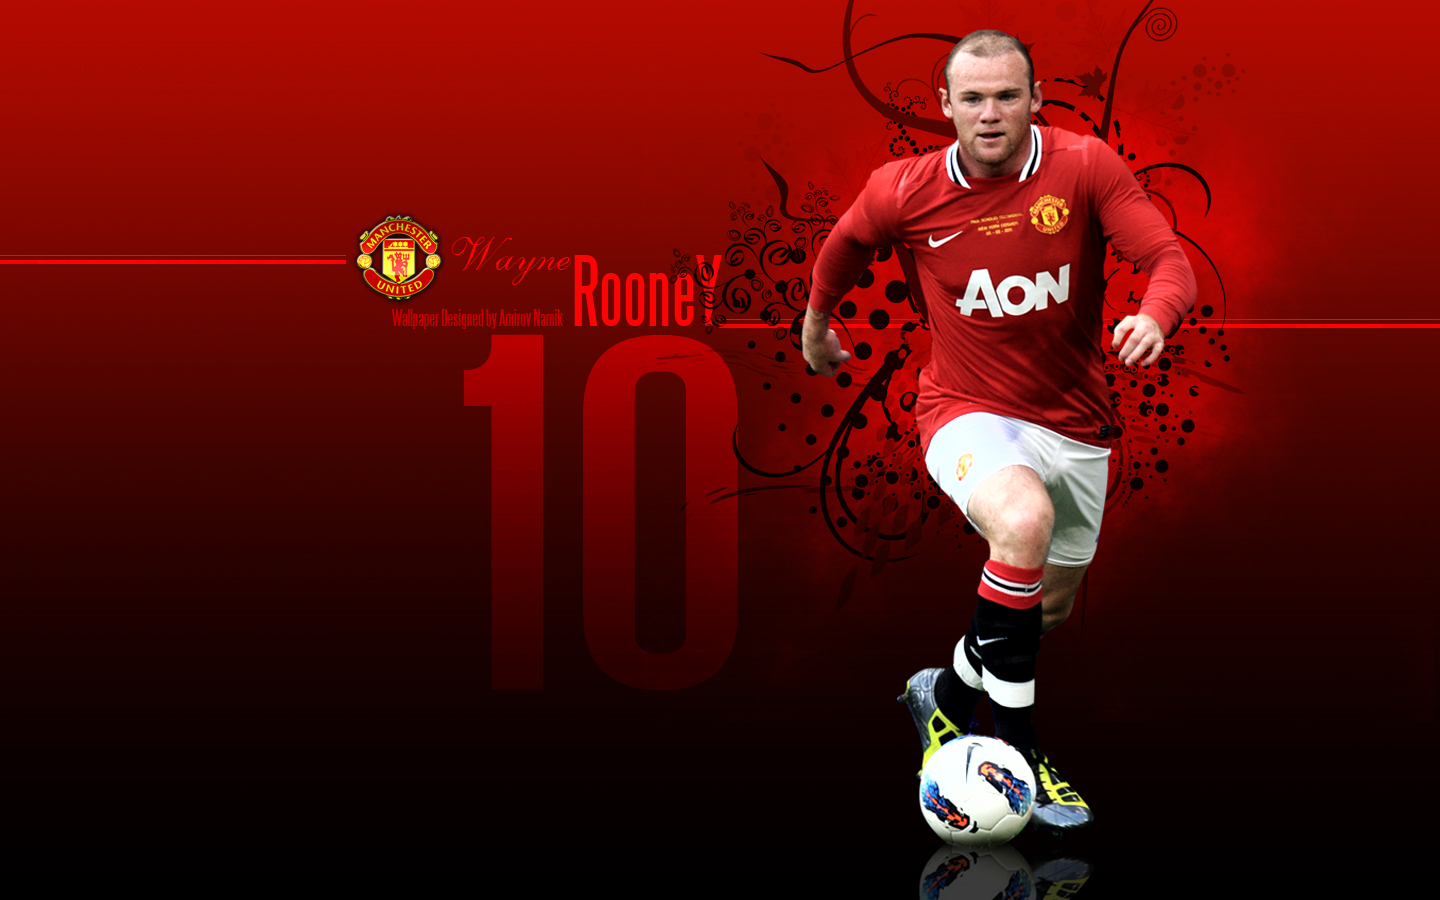 Wallpaper HD For Mac Wayne Rooney Manchester United